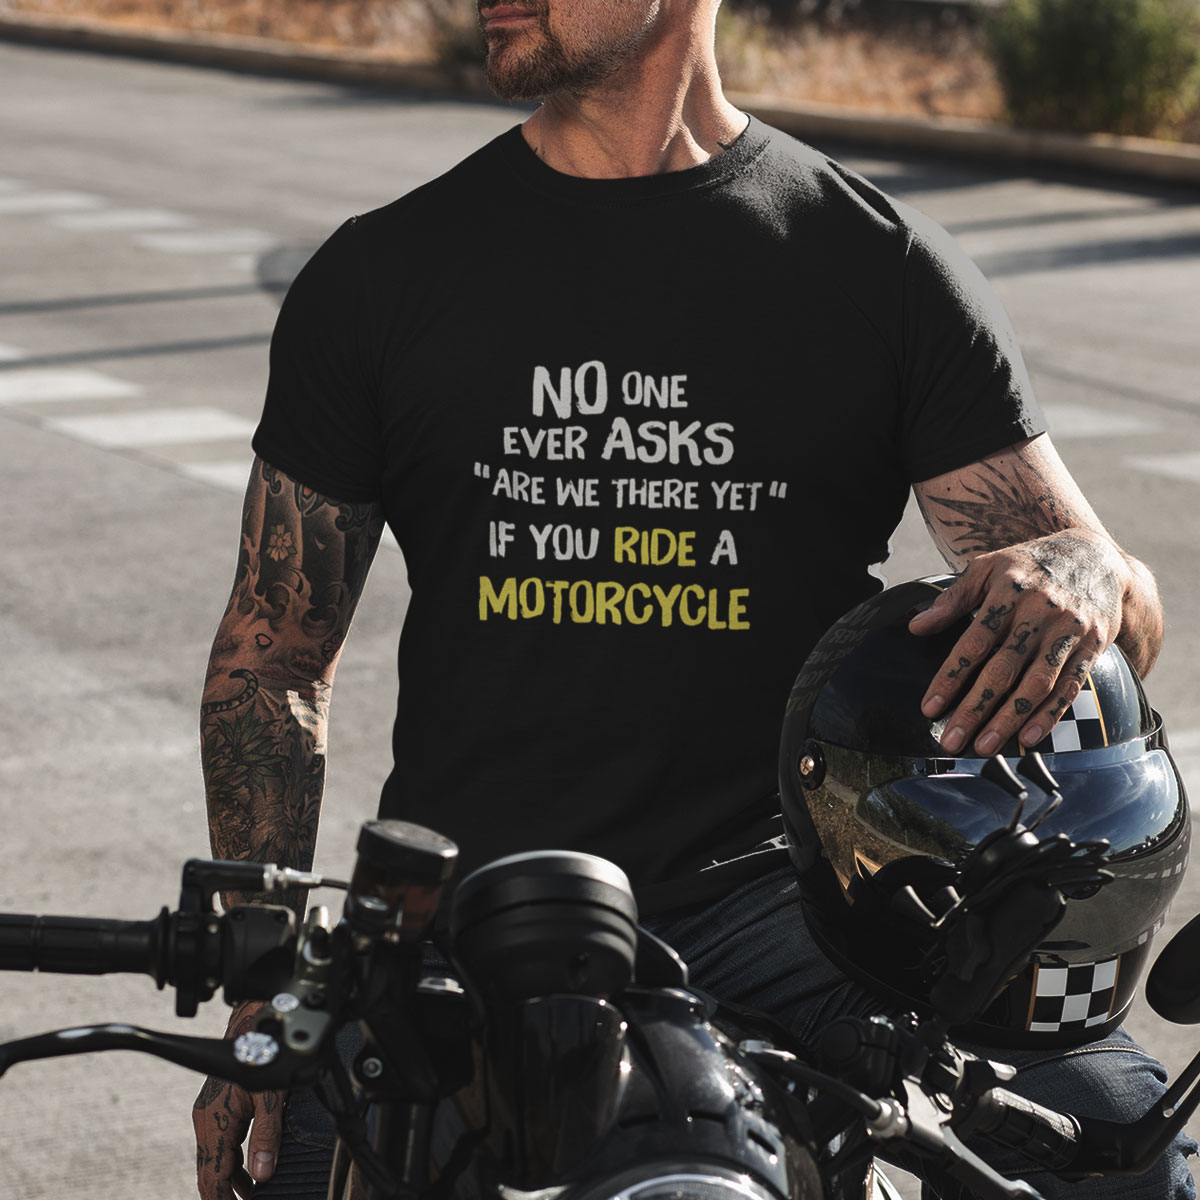 https://shop.titan-motorcycles.com/wp-content/uploads/2020/06/02_Hoverbild-4.jpg